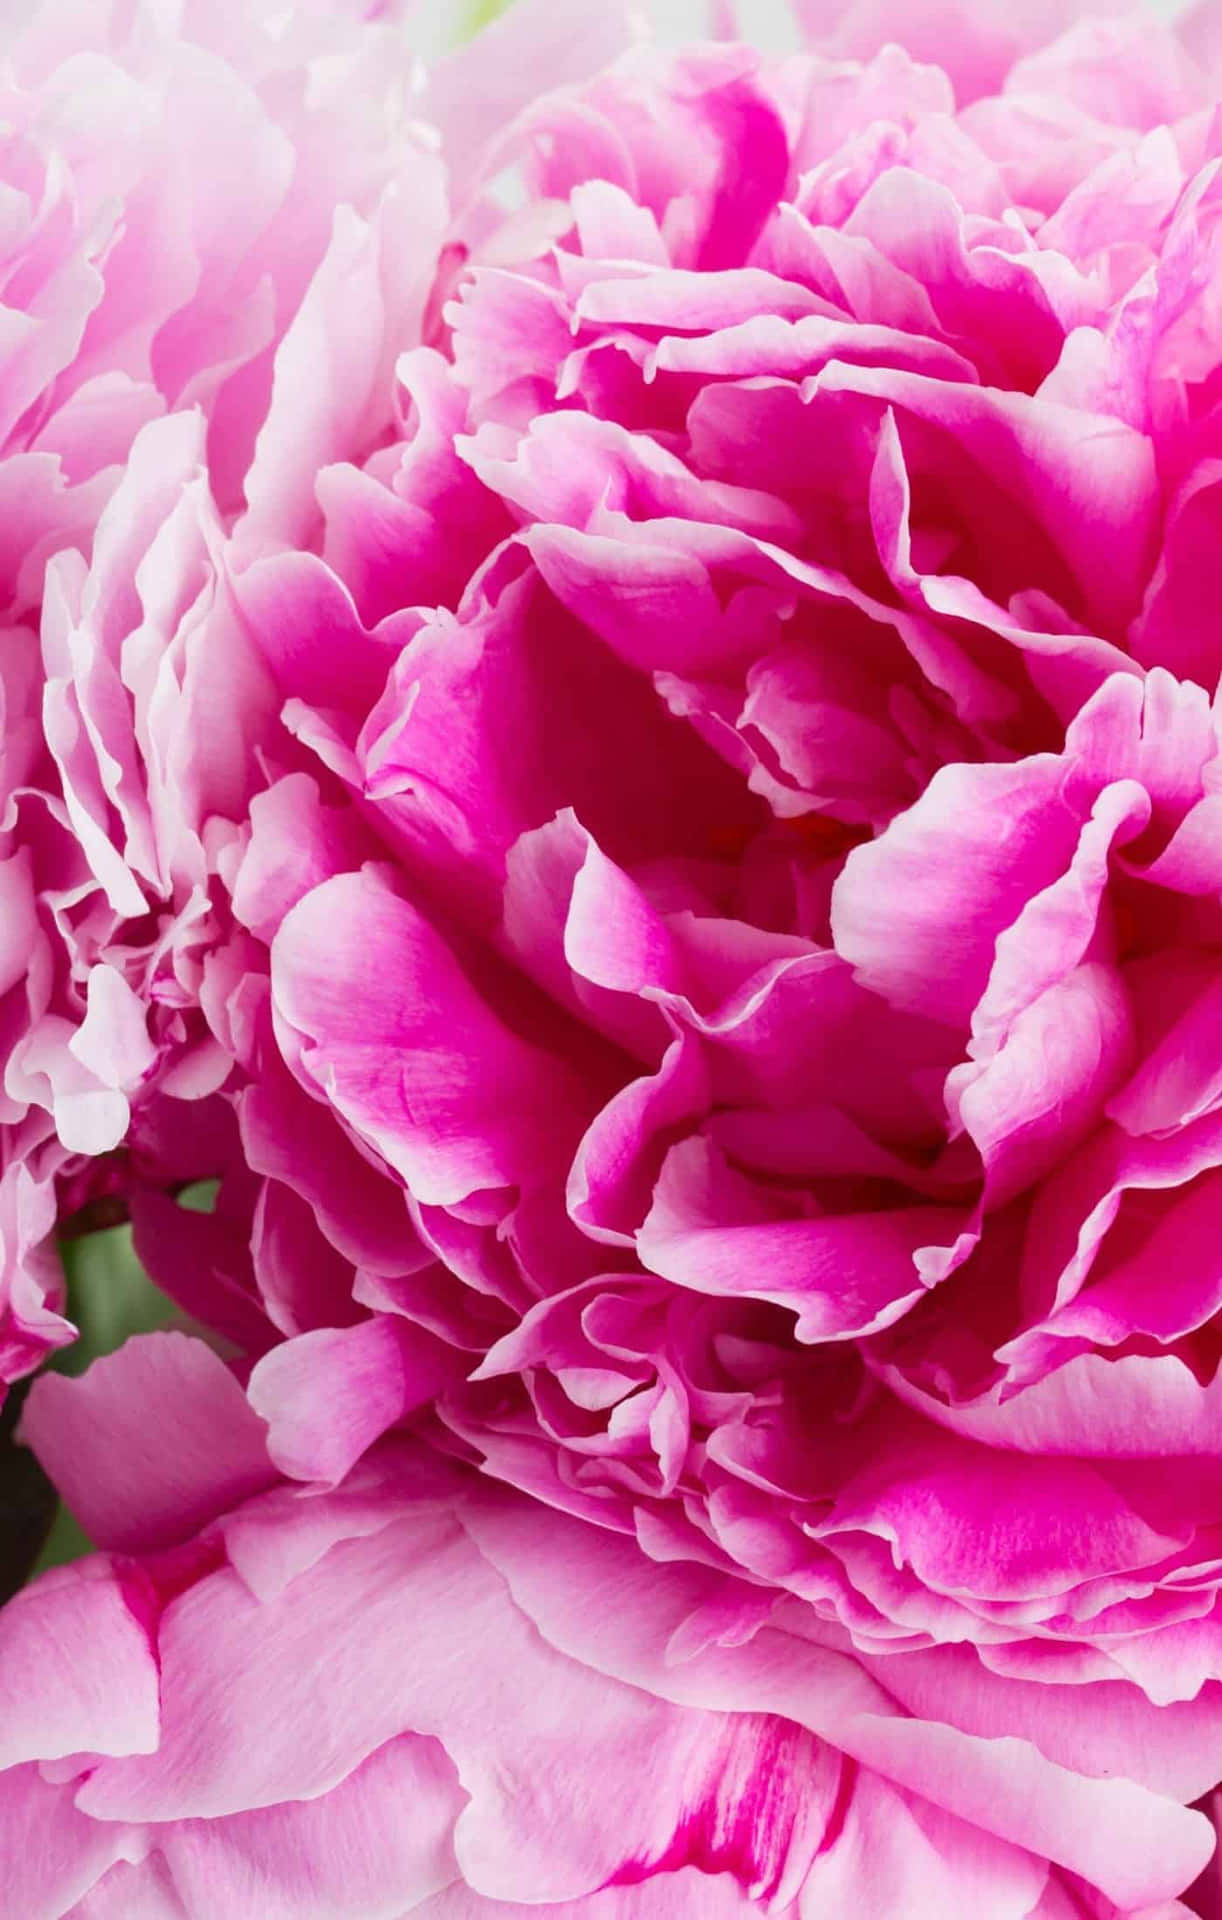 Descubrela Belleza De La Naturaleza: Una Flor Rosa Adornando Un Teléfono. Fondo de pantalla